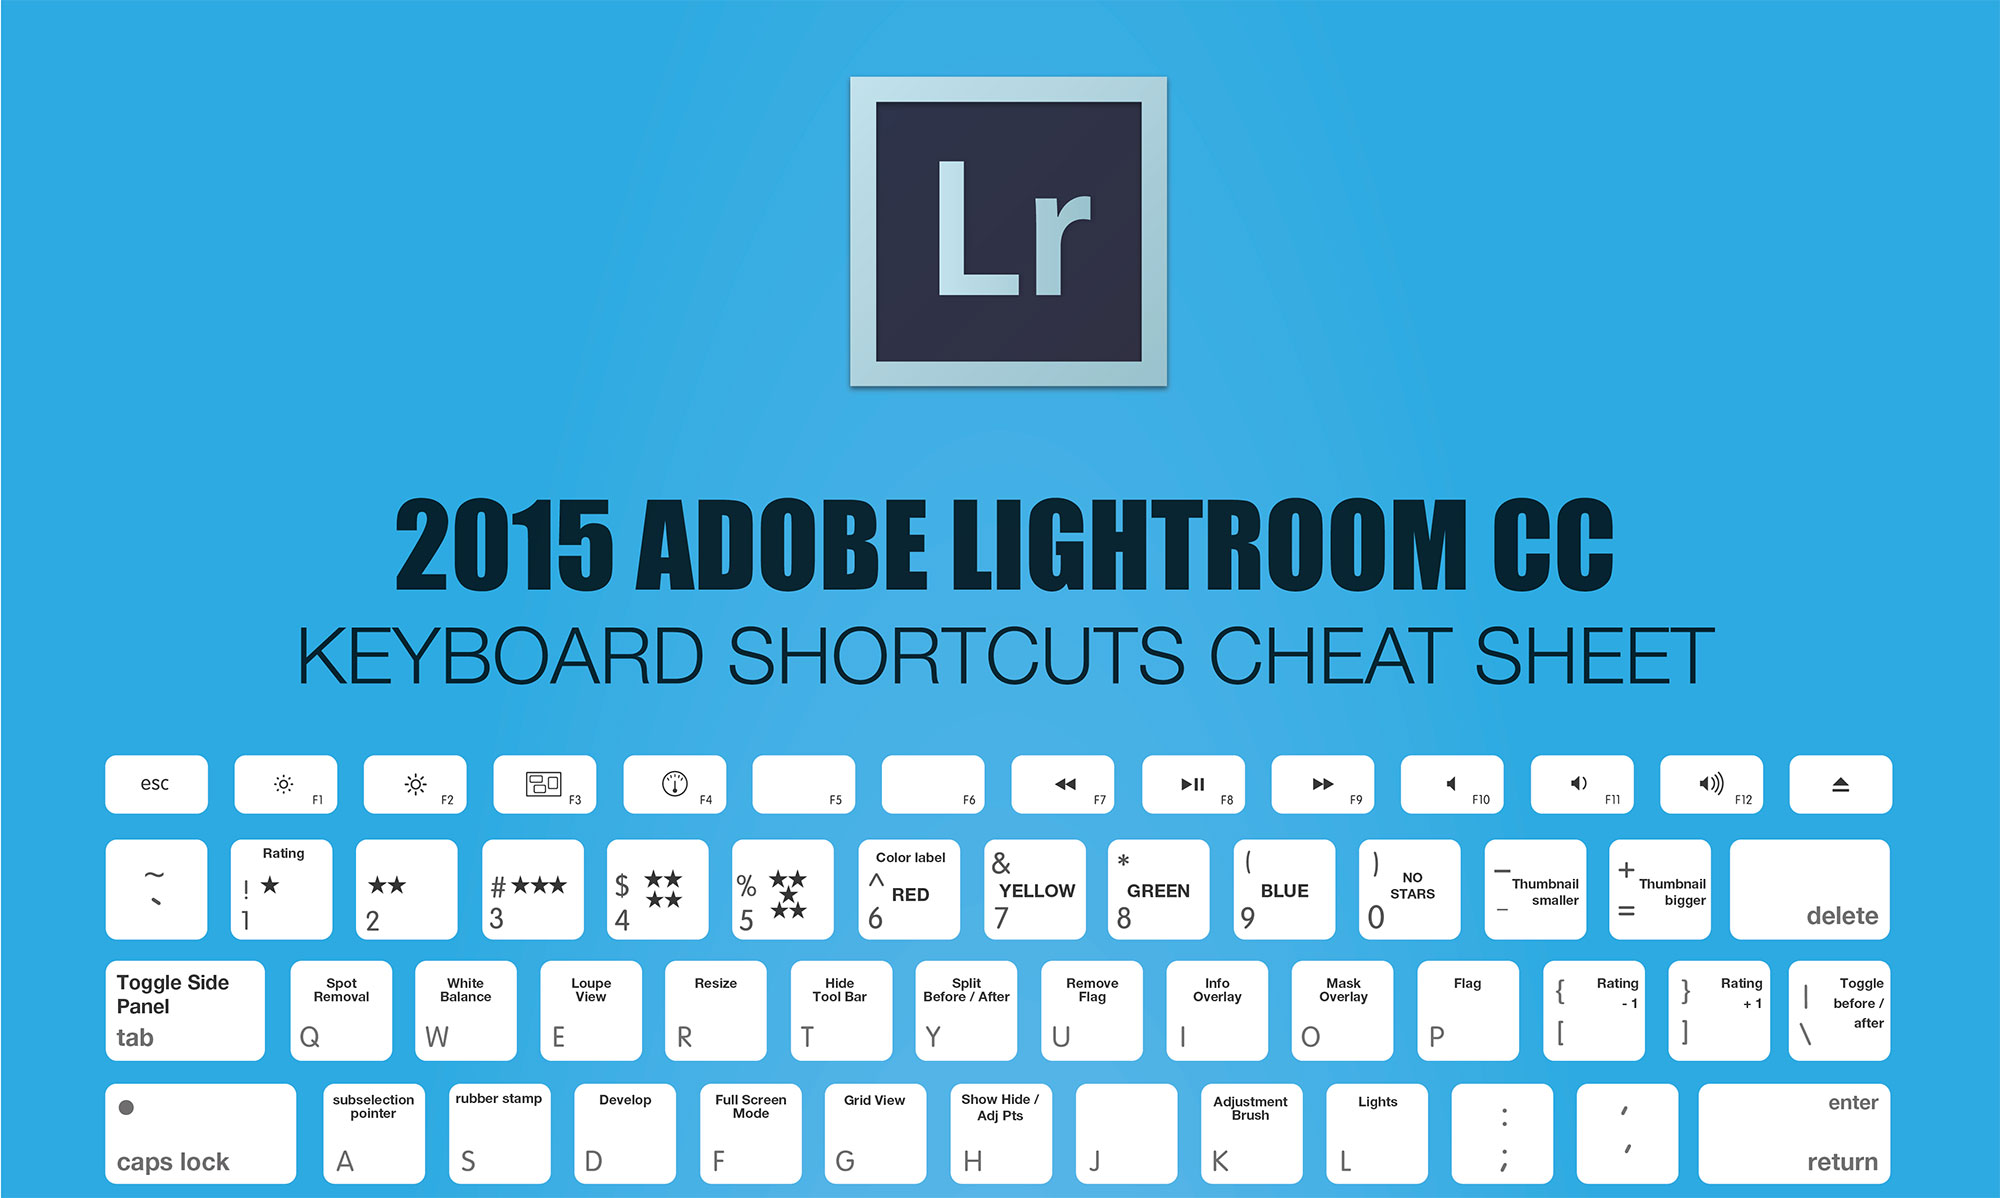 lightroom-keyboard-shortcuts-cheat-sheet1.jpg